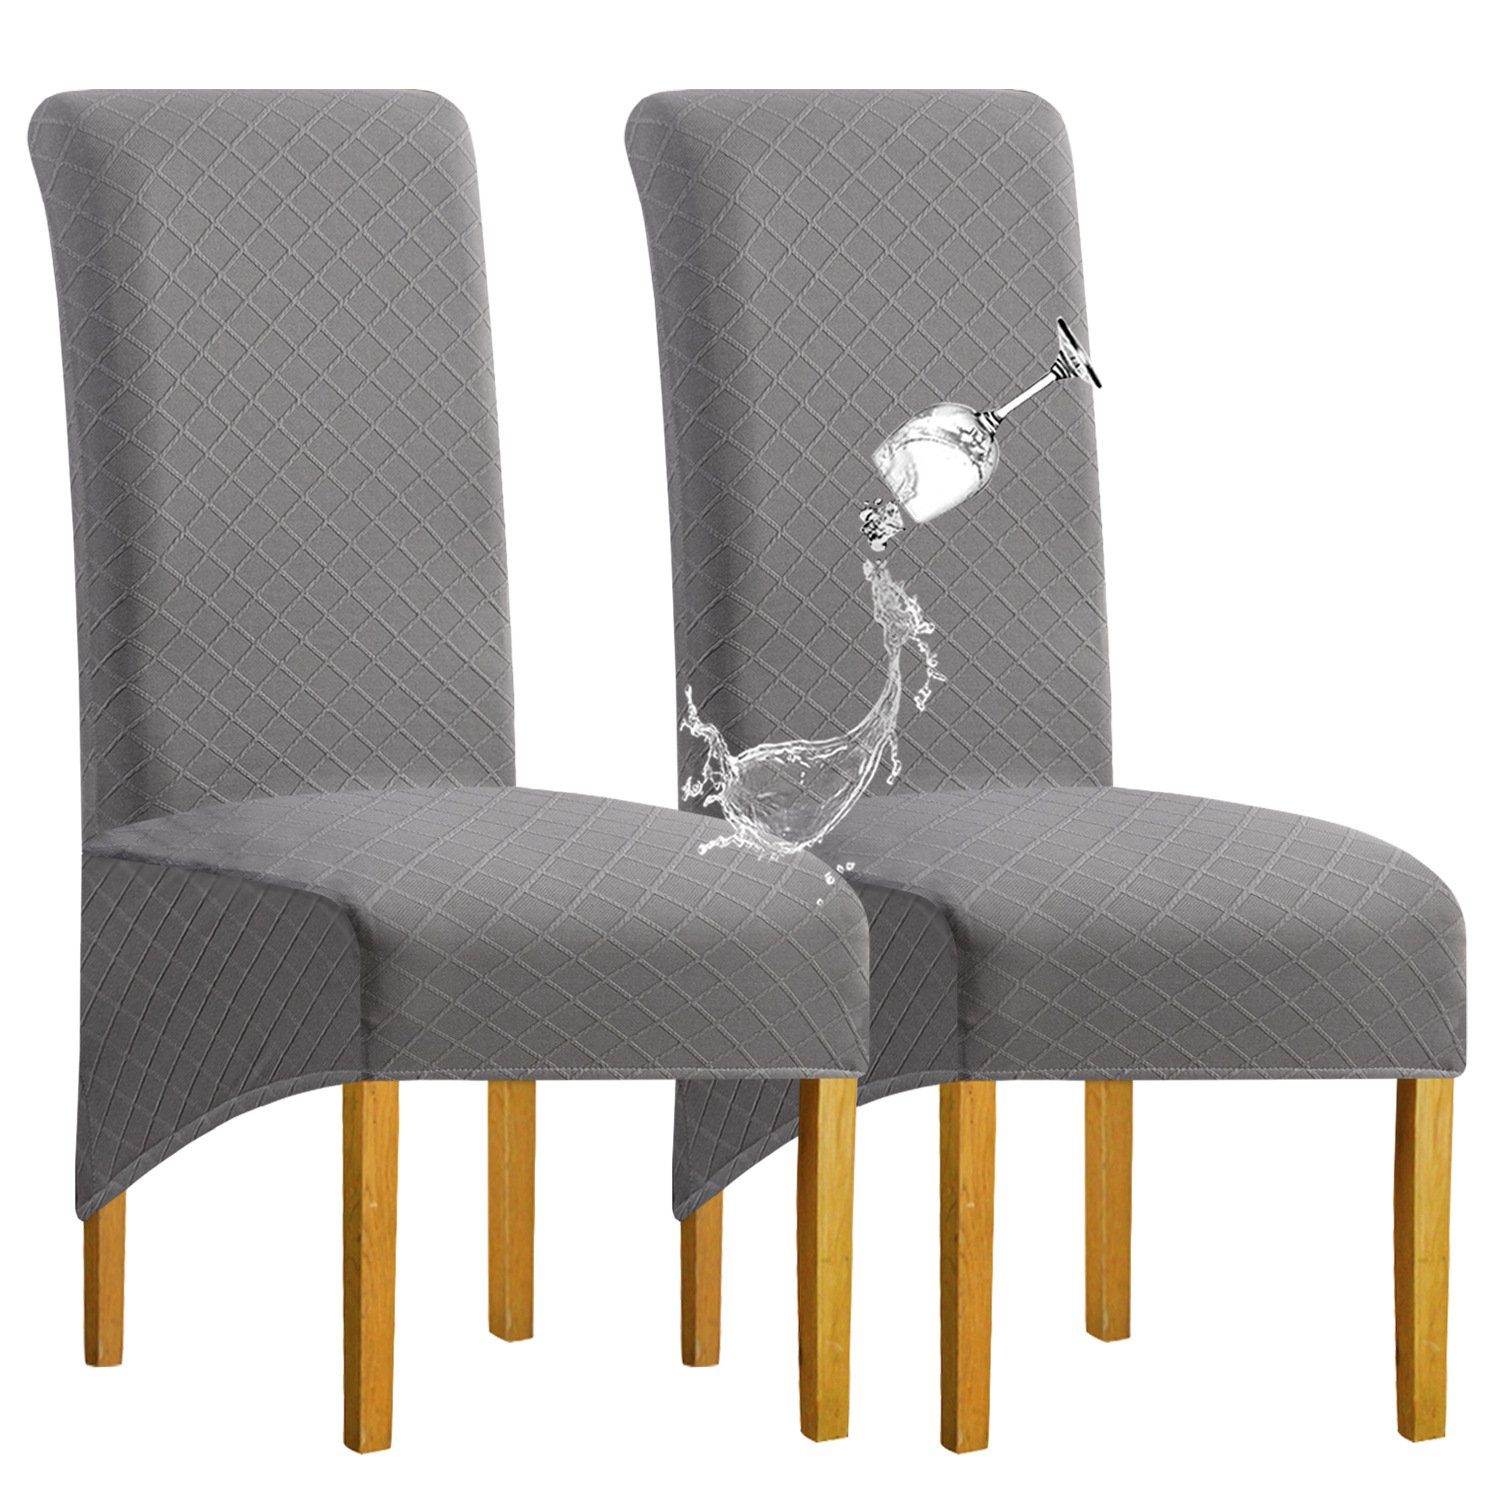 Stuhlhusse Stuhlhussen Universal Stretch Stuhlbezug für Stuhl Esszimmer 2er Set, HIBNOPN